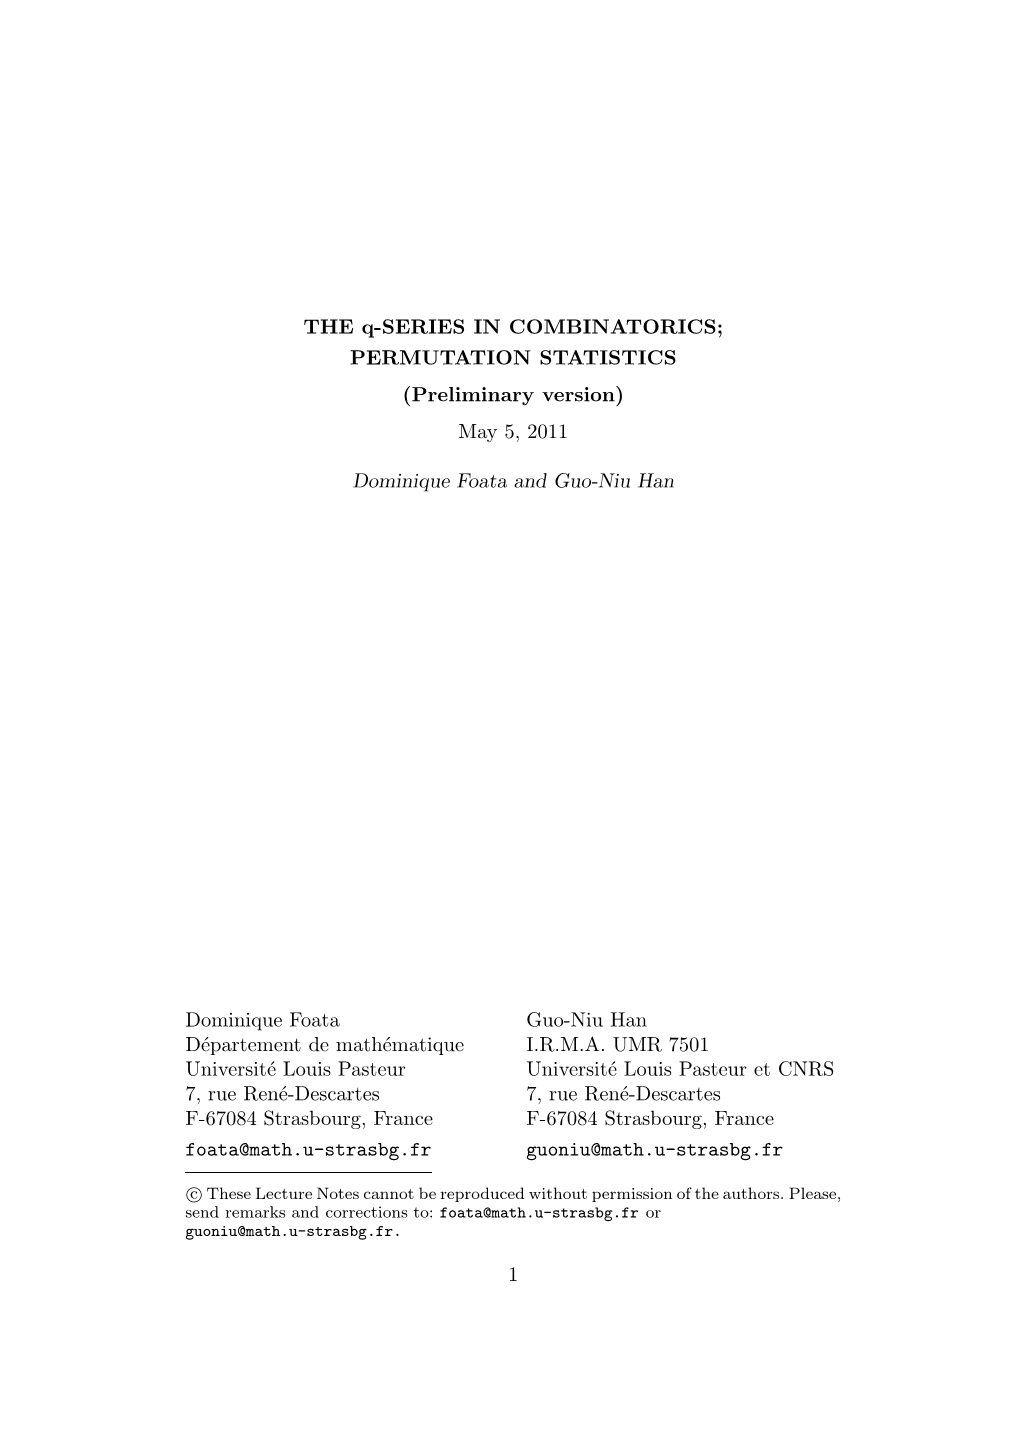 THE Q-SERIES in COMBINATORICS; PERMUTATION STATISTICS (Preliminary Version) May 5, 2011